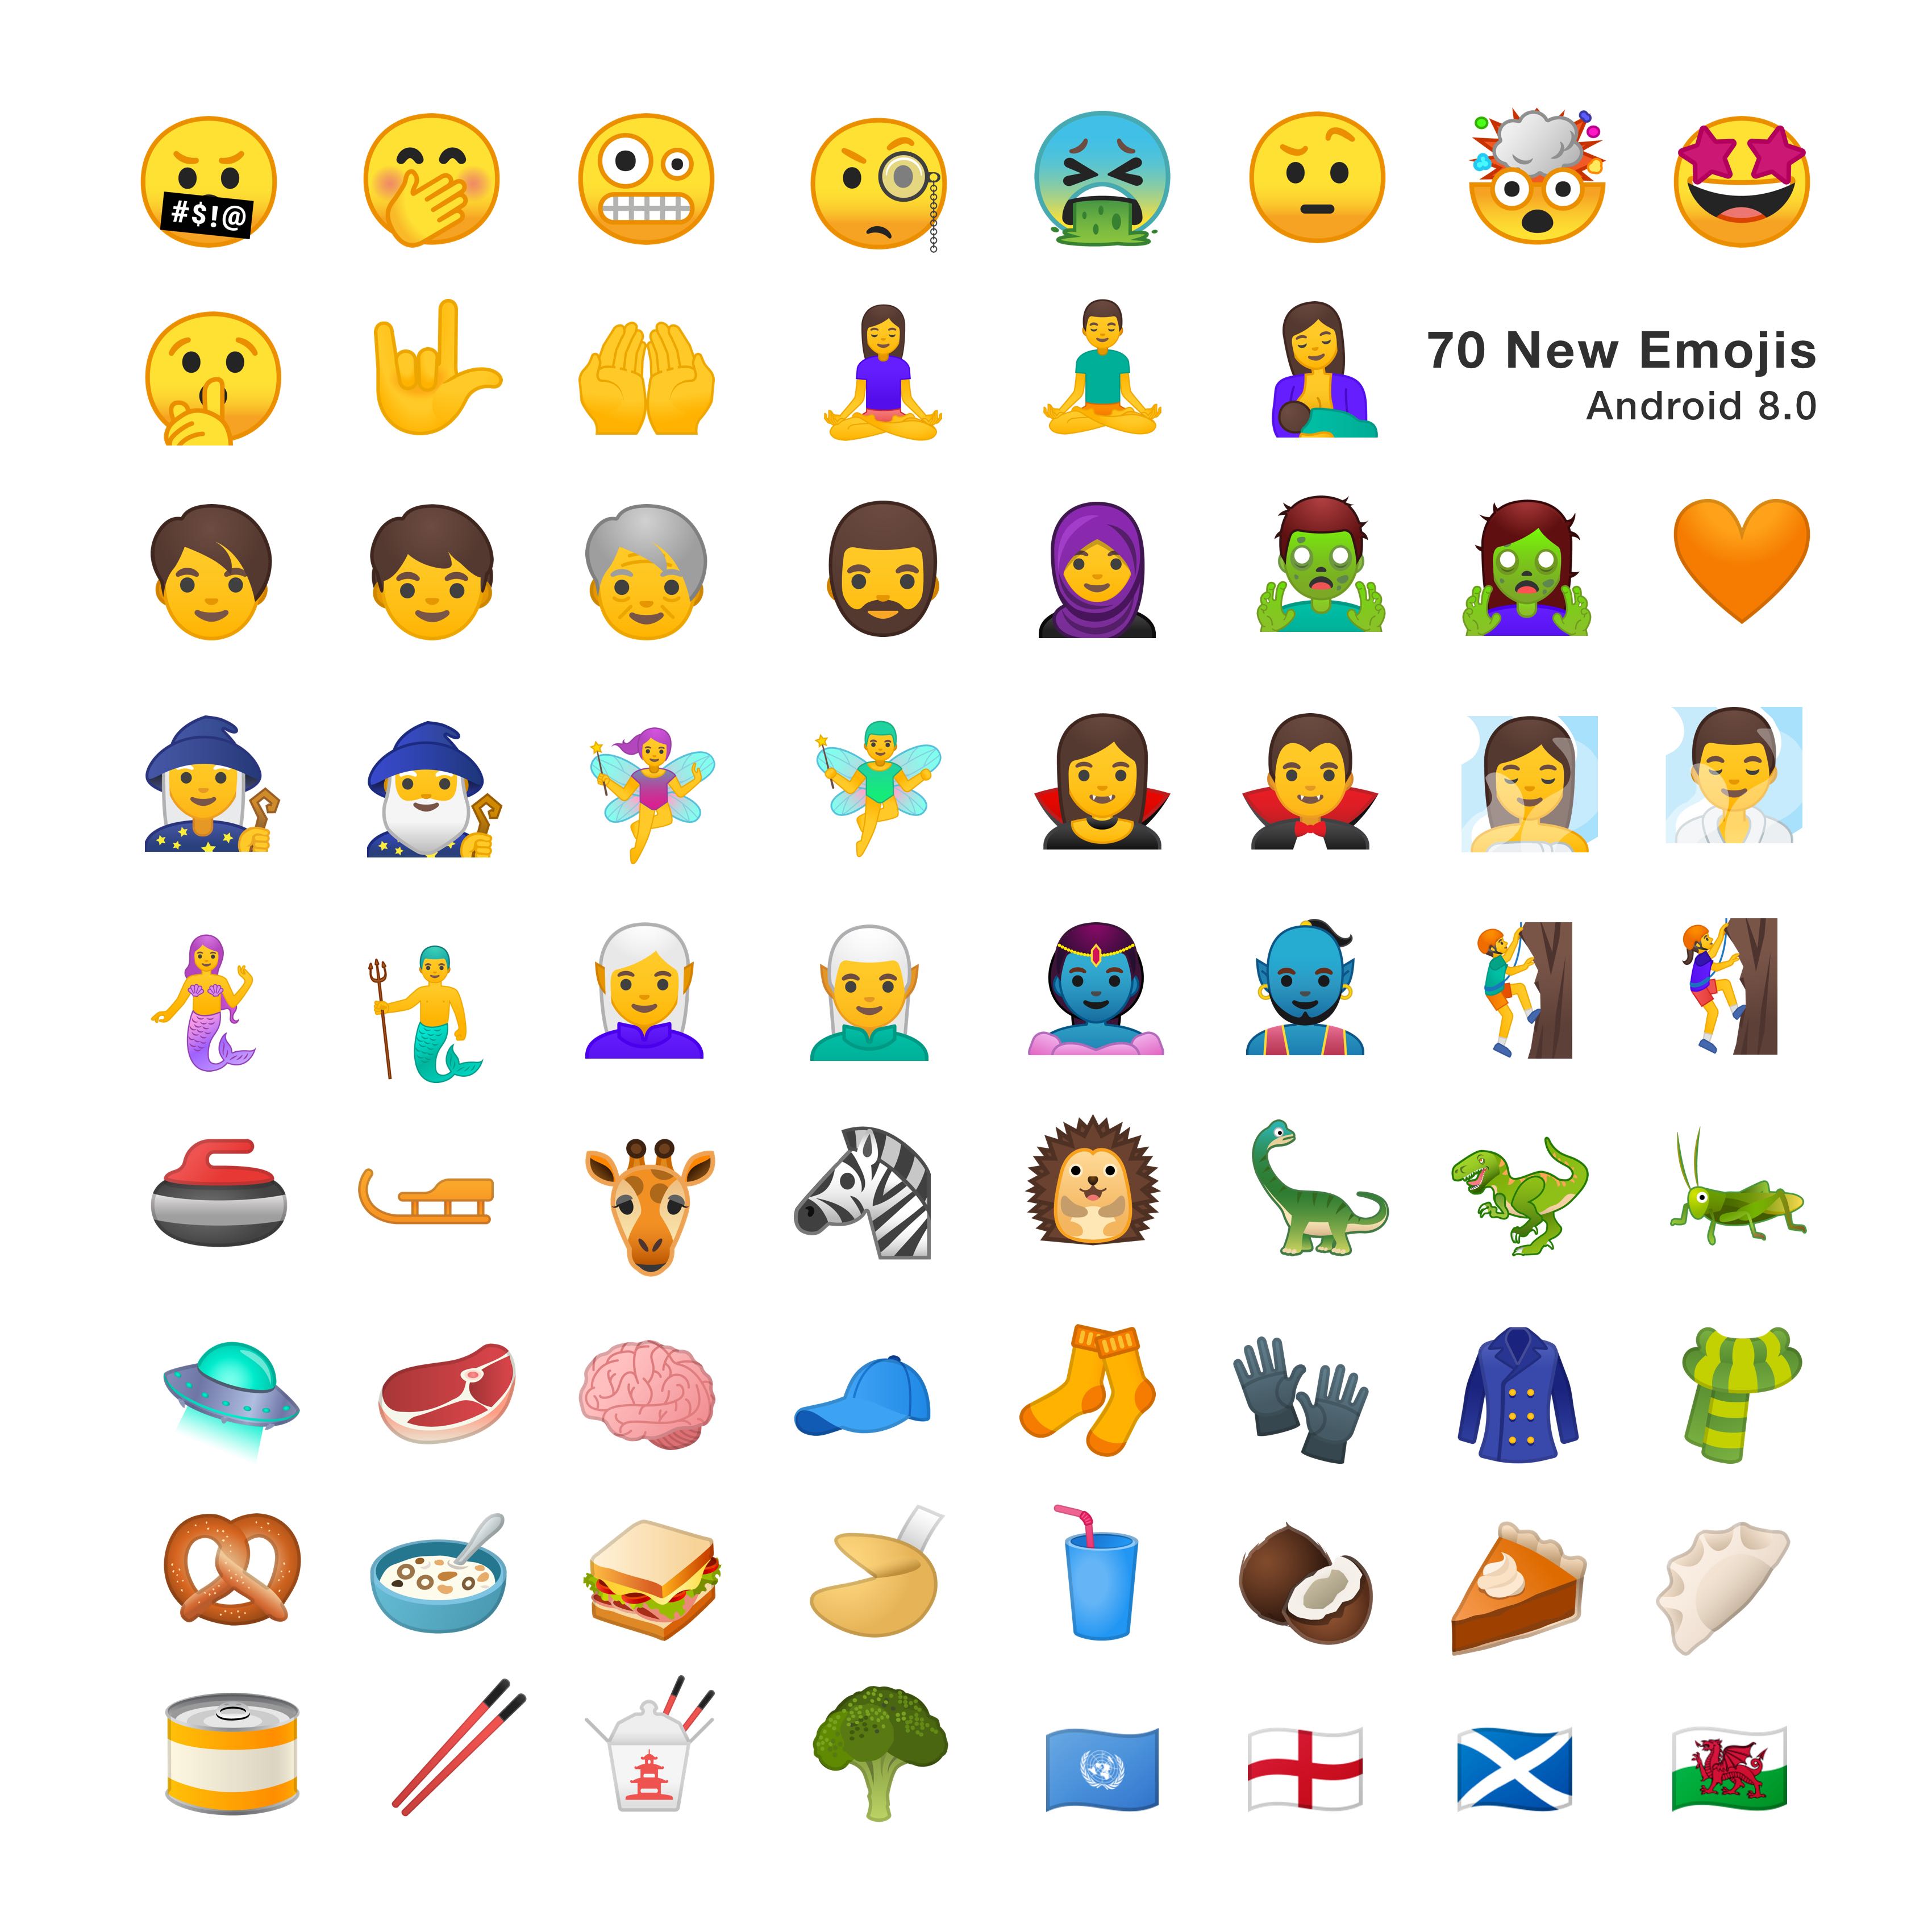 Android 8.0 Emoji Changelog